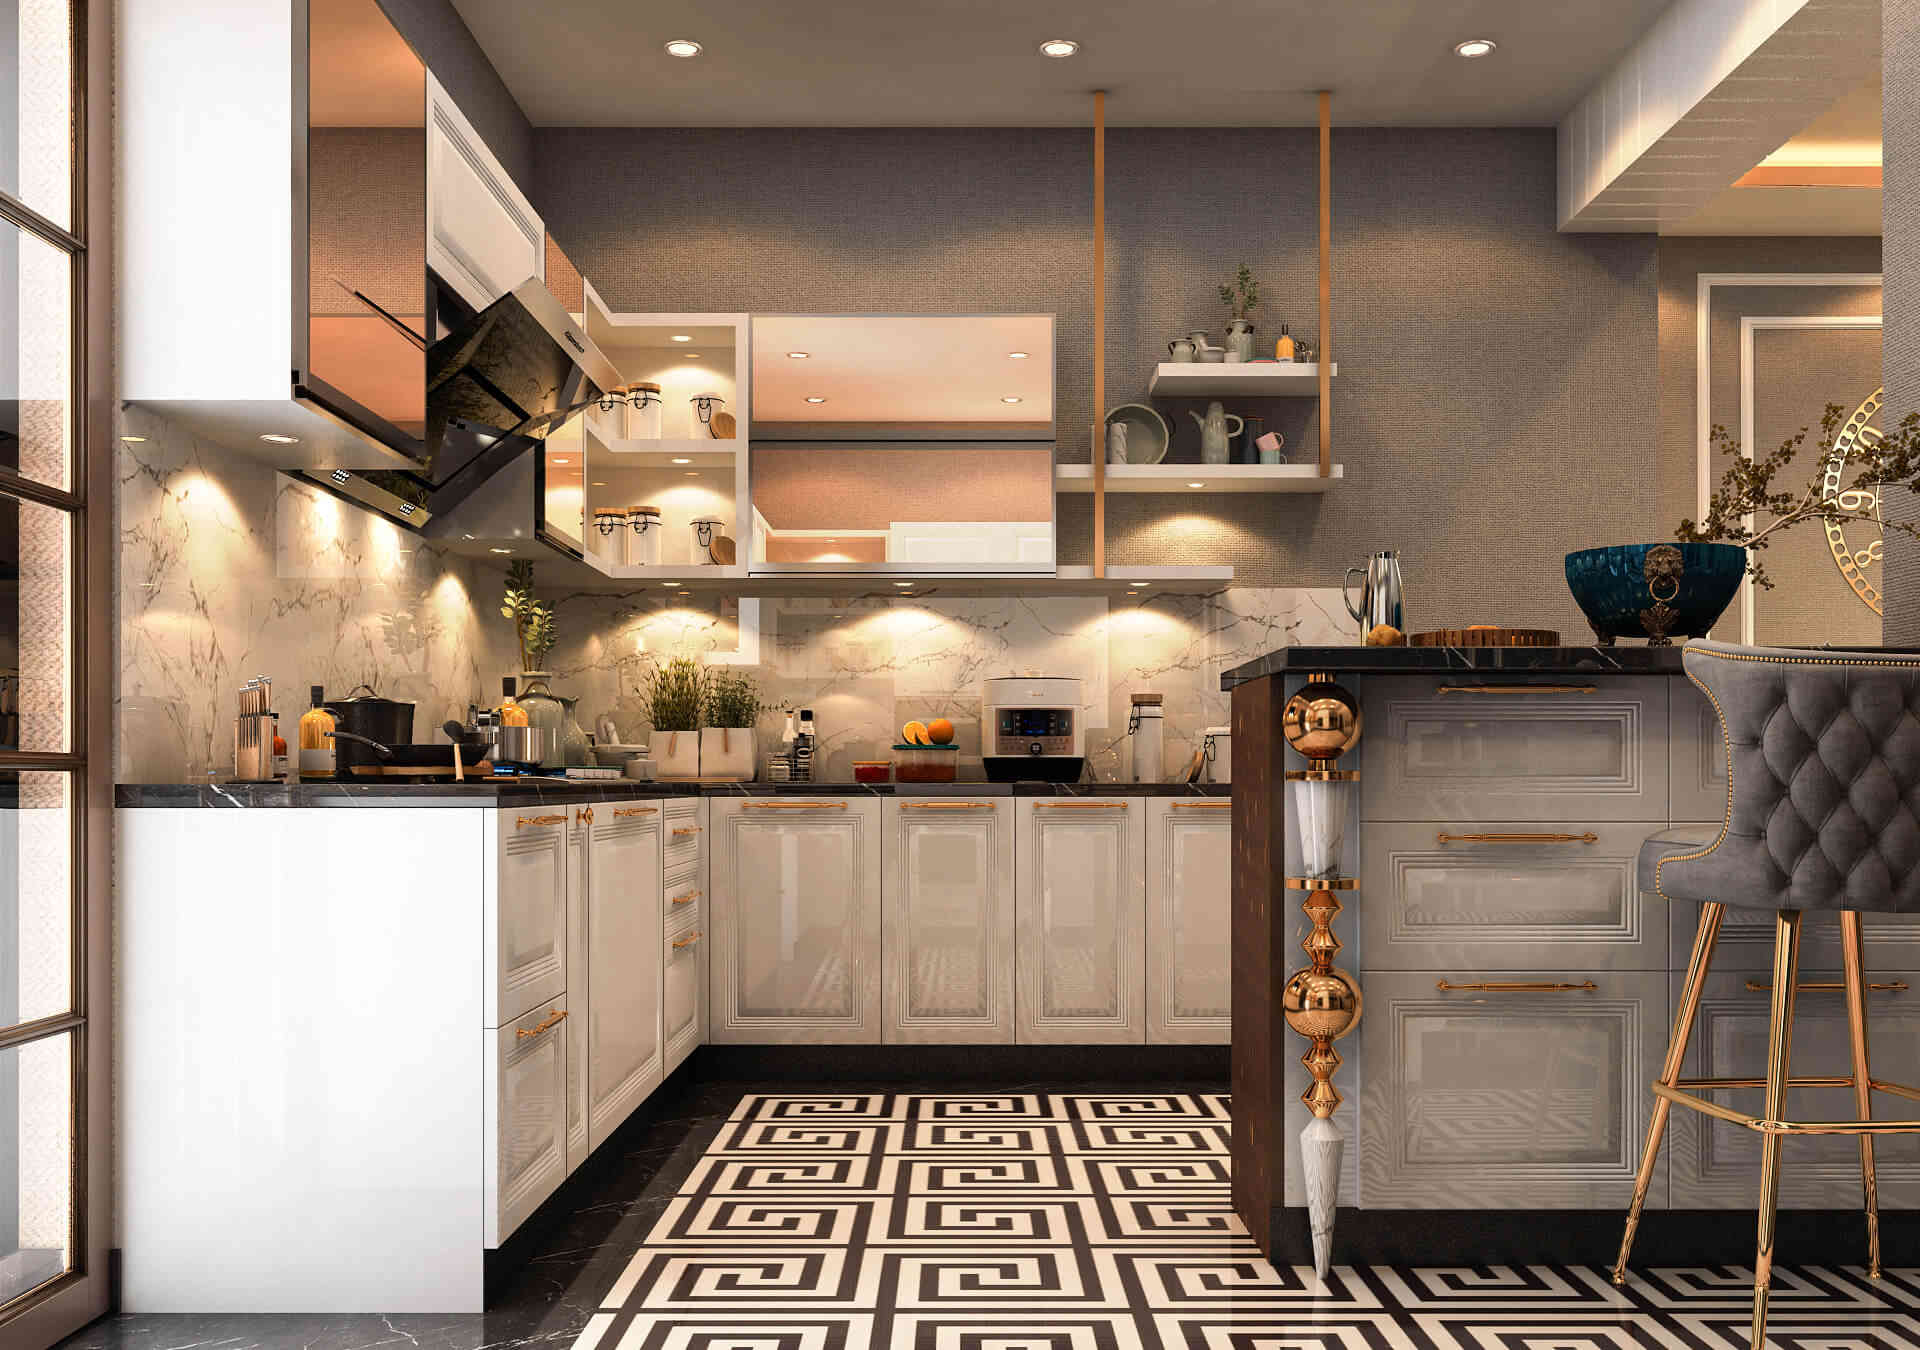 Elegantly Designed Modular Kitchen With Geometric Shape Floor Tiles